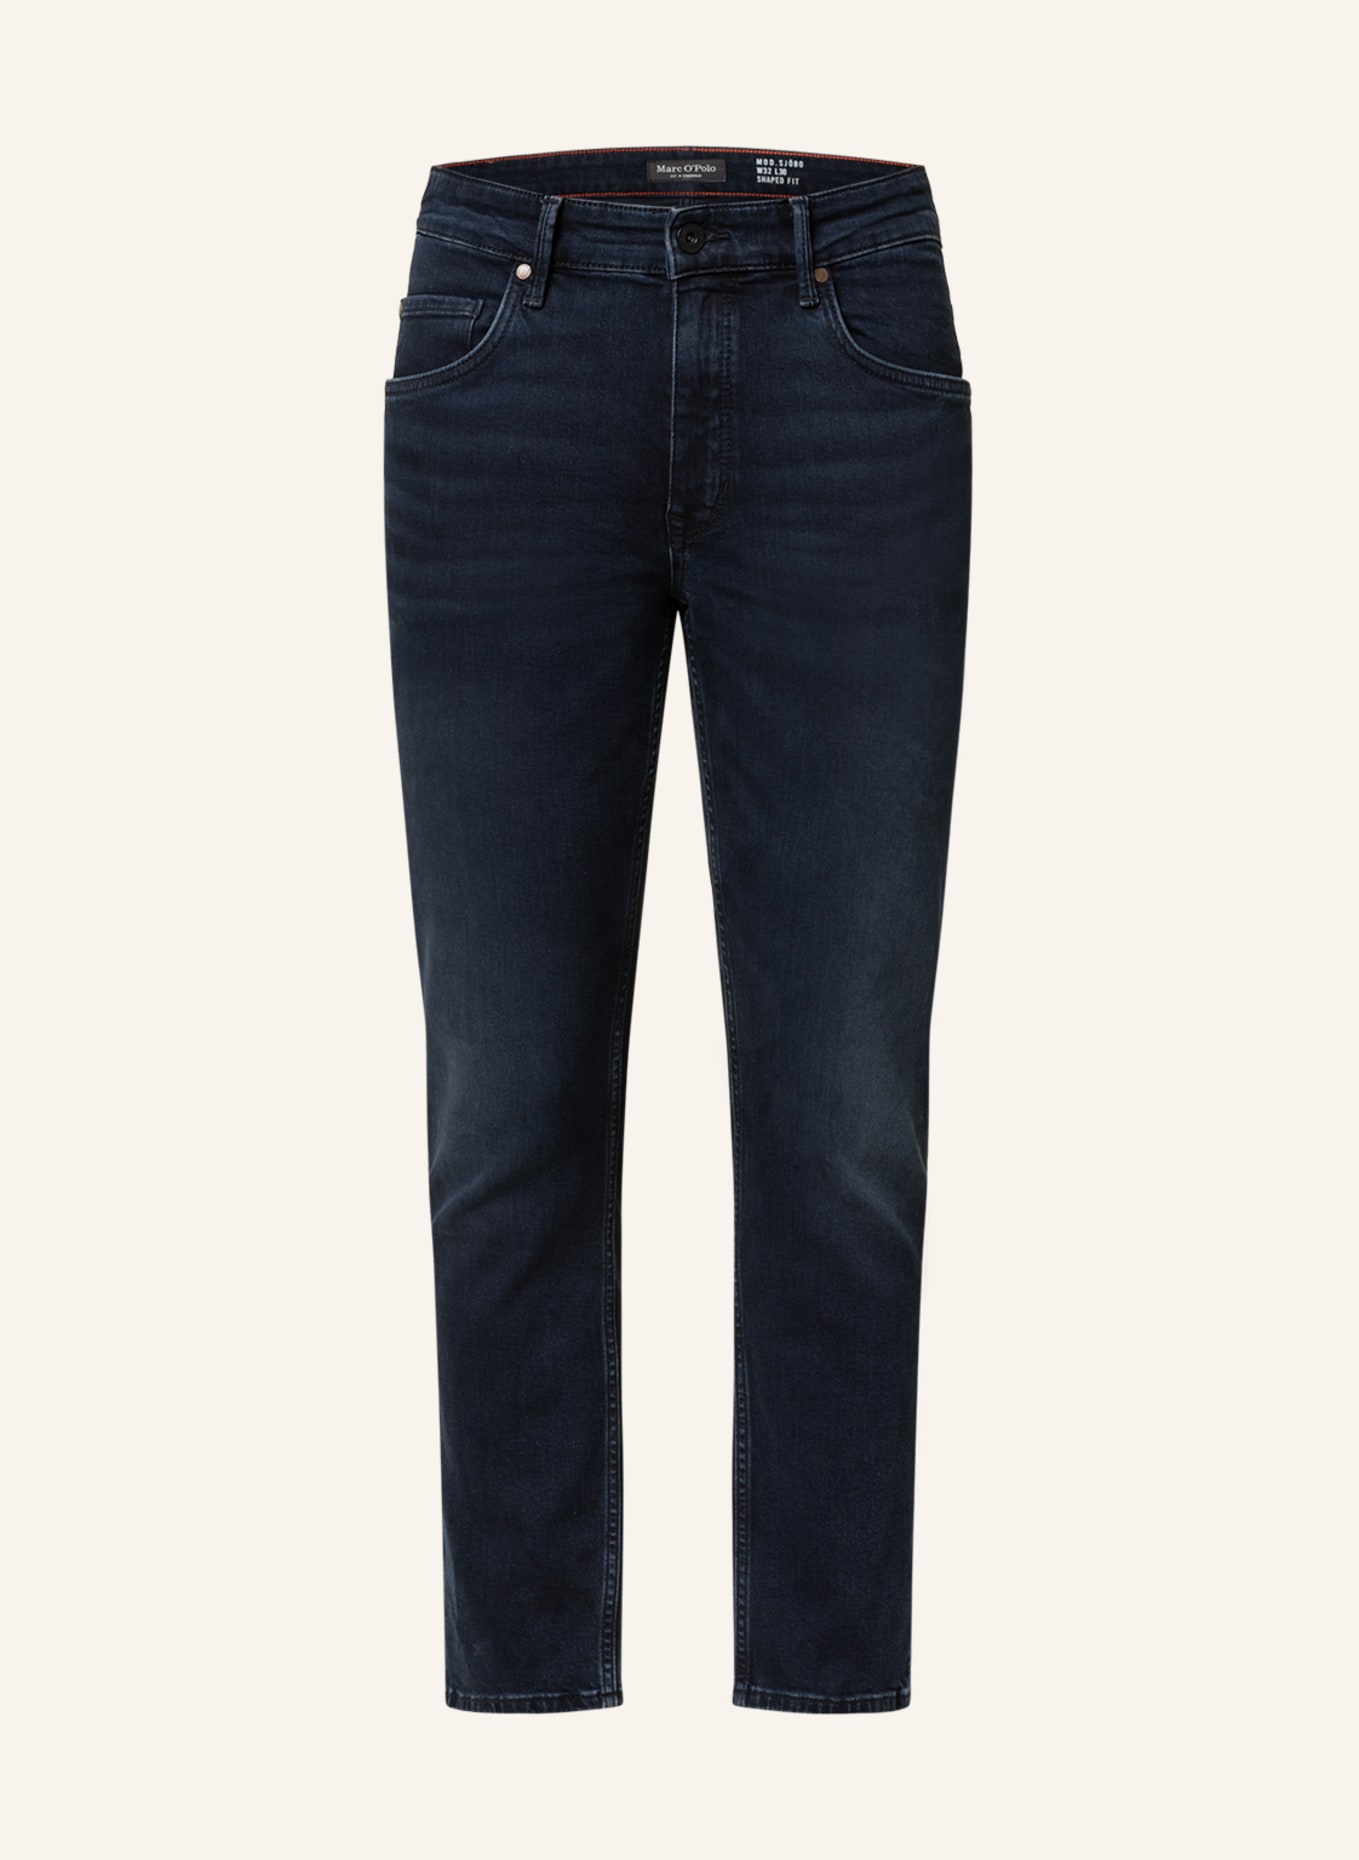 Marc O'Polo Jeans SJÖBO Shaped Fit, Farbe: 034 blue black (Bild 1)